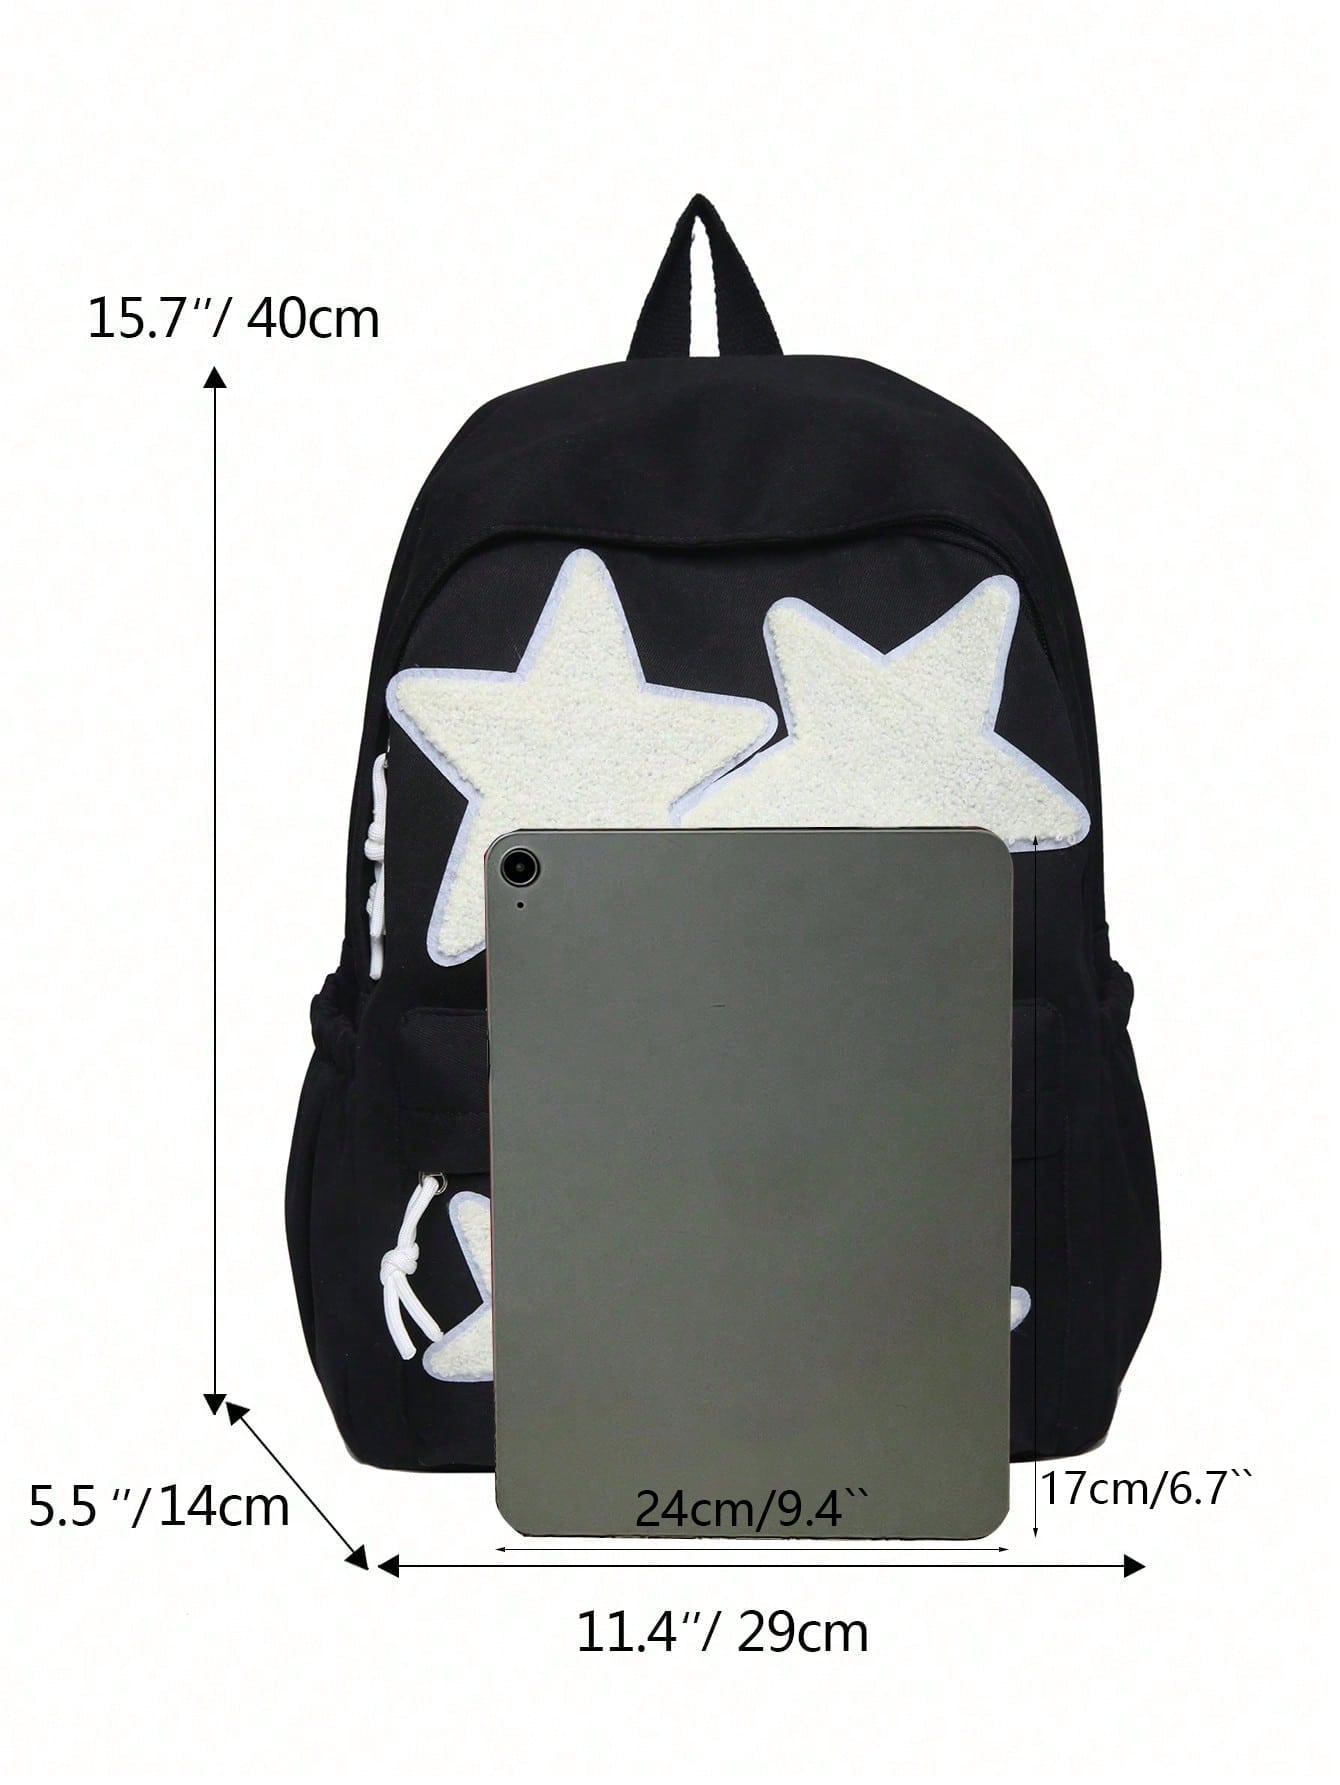 Nextthink Fashionable Classic Star Pattern Backpack - NextthinkShop843bde19-d3ad-4bda-8799-6addf469caa4313032554541